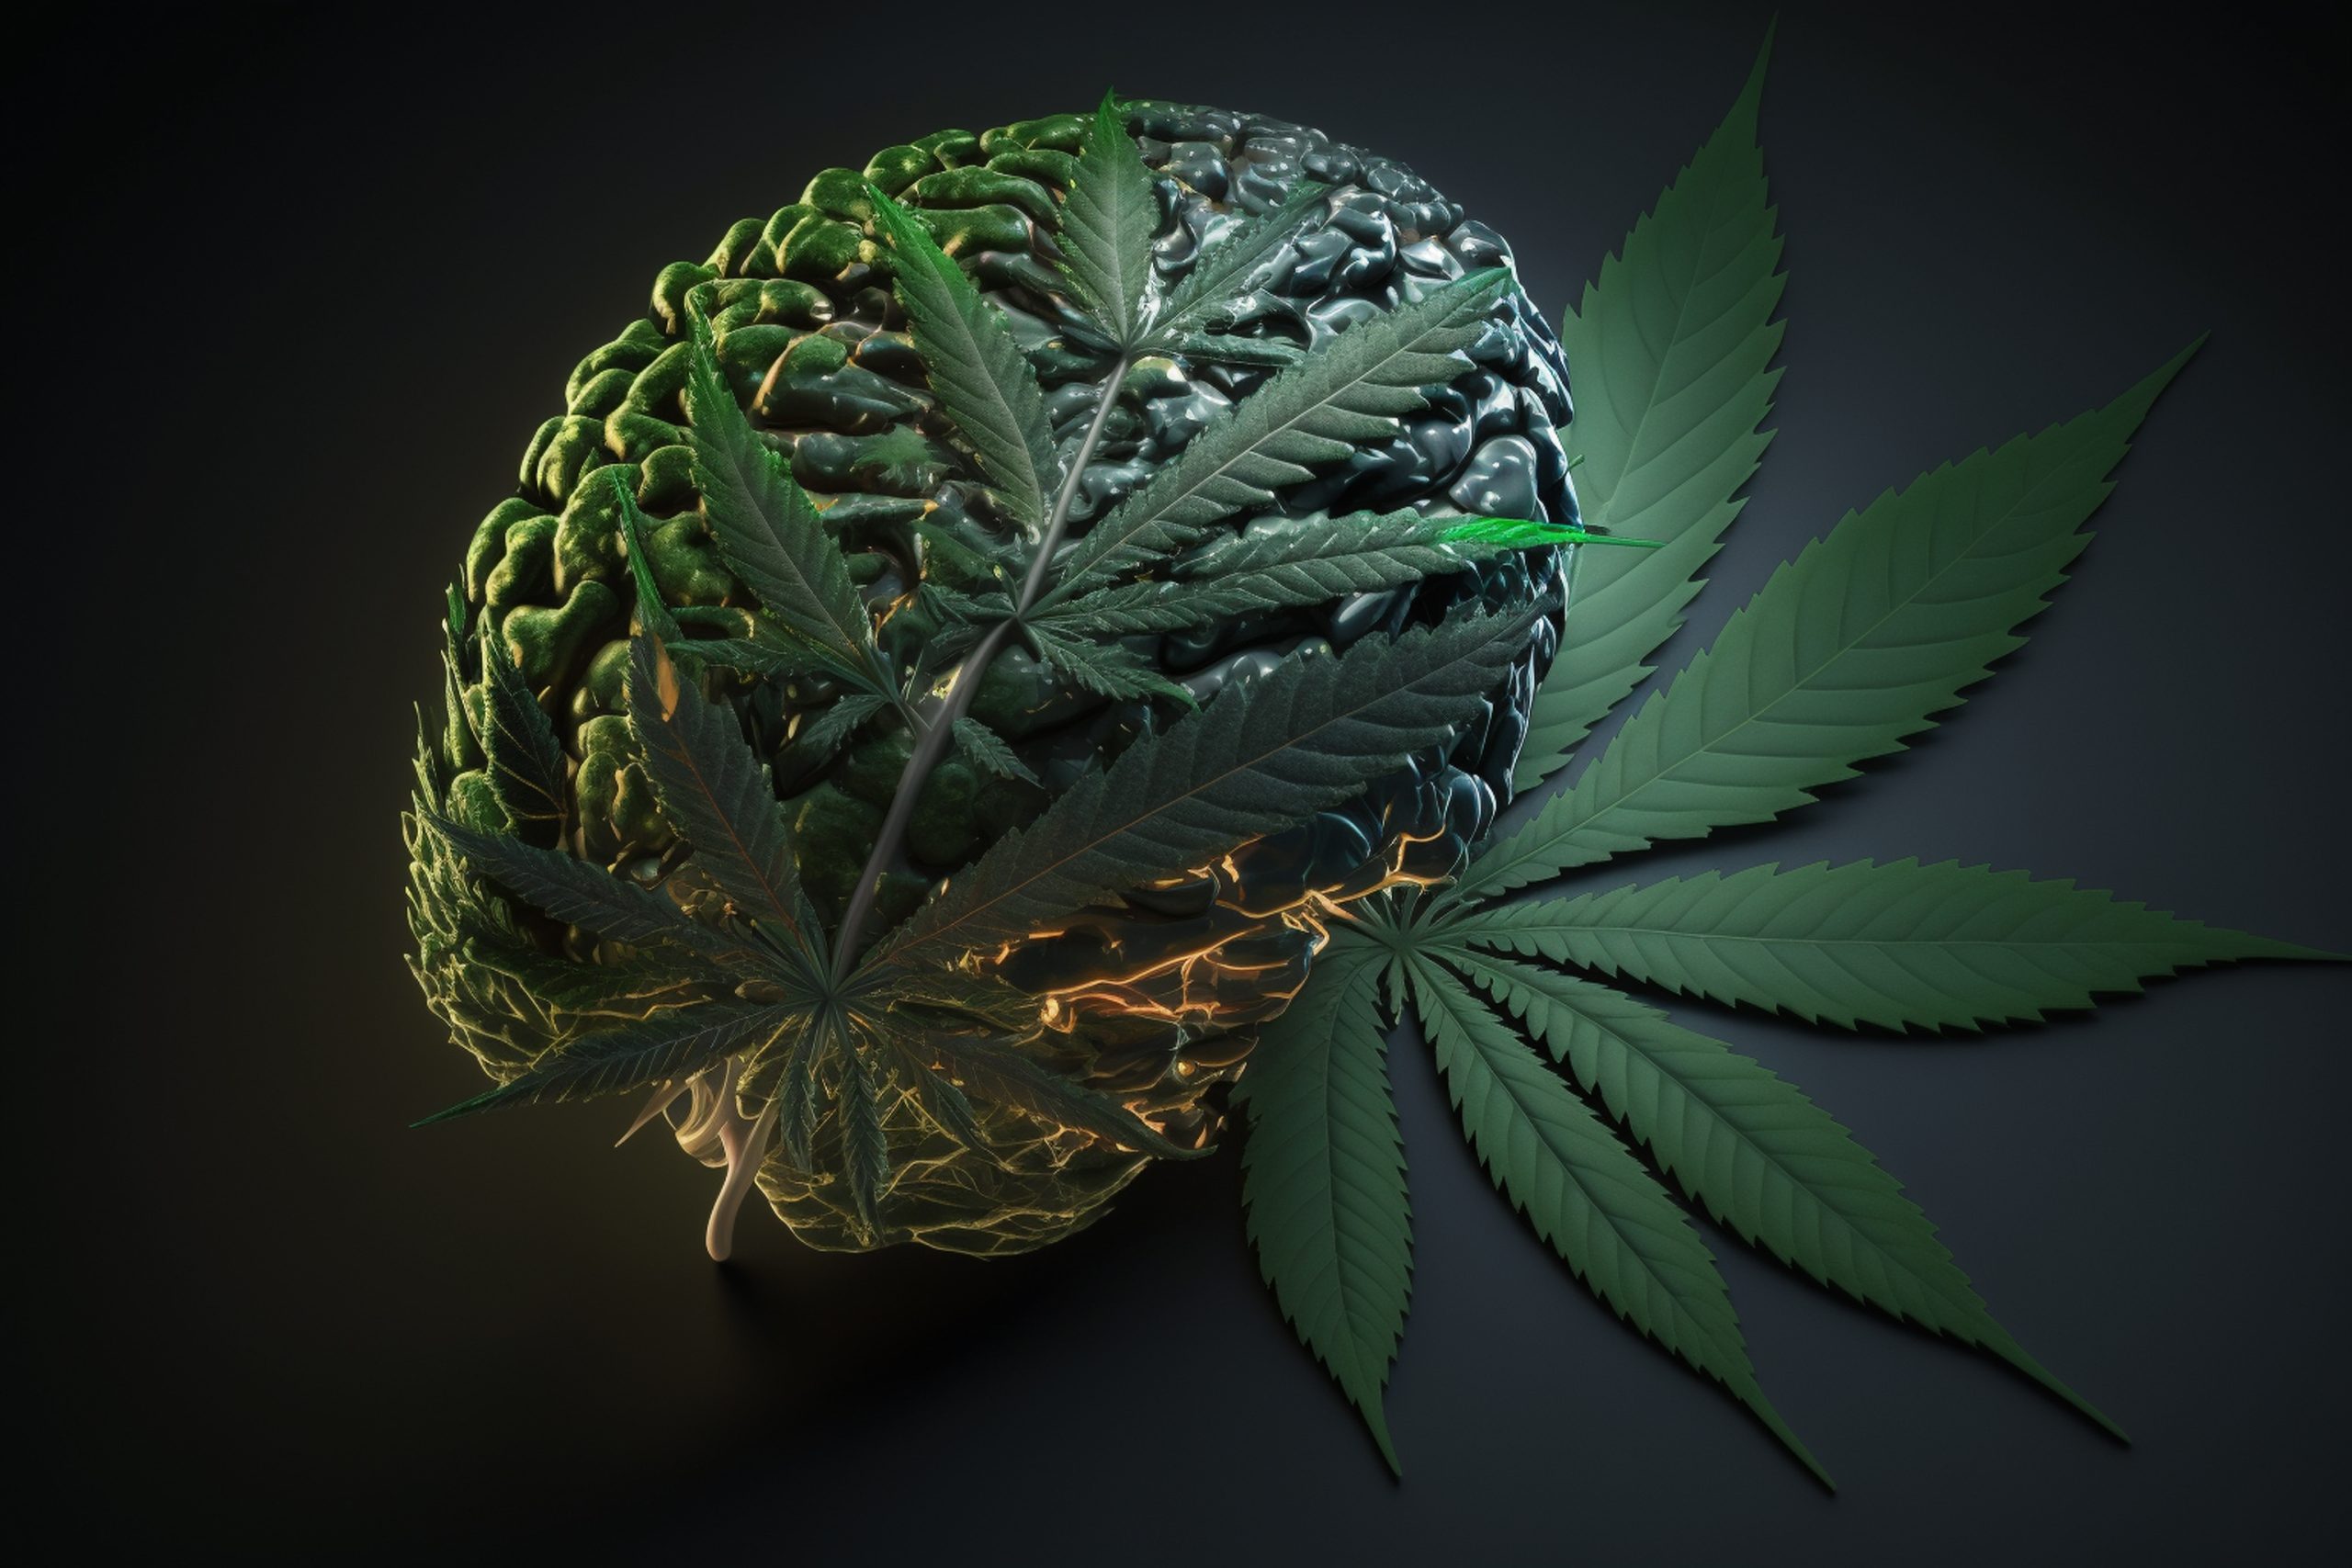 brain and cannabis, created by a neural network